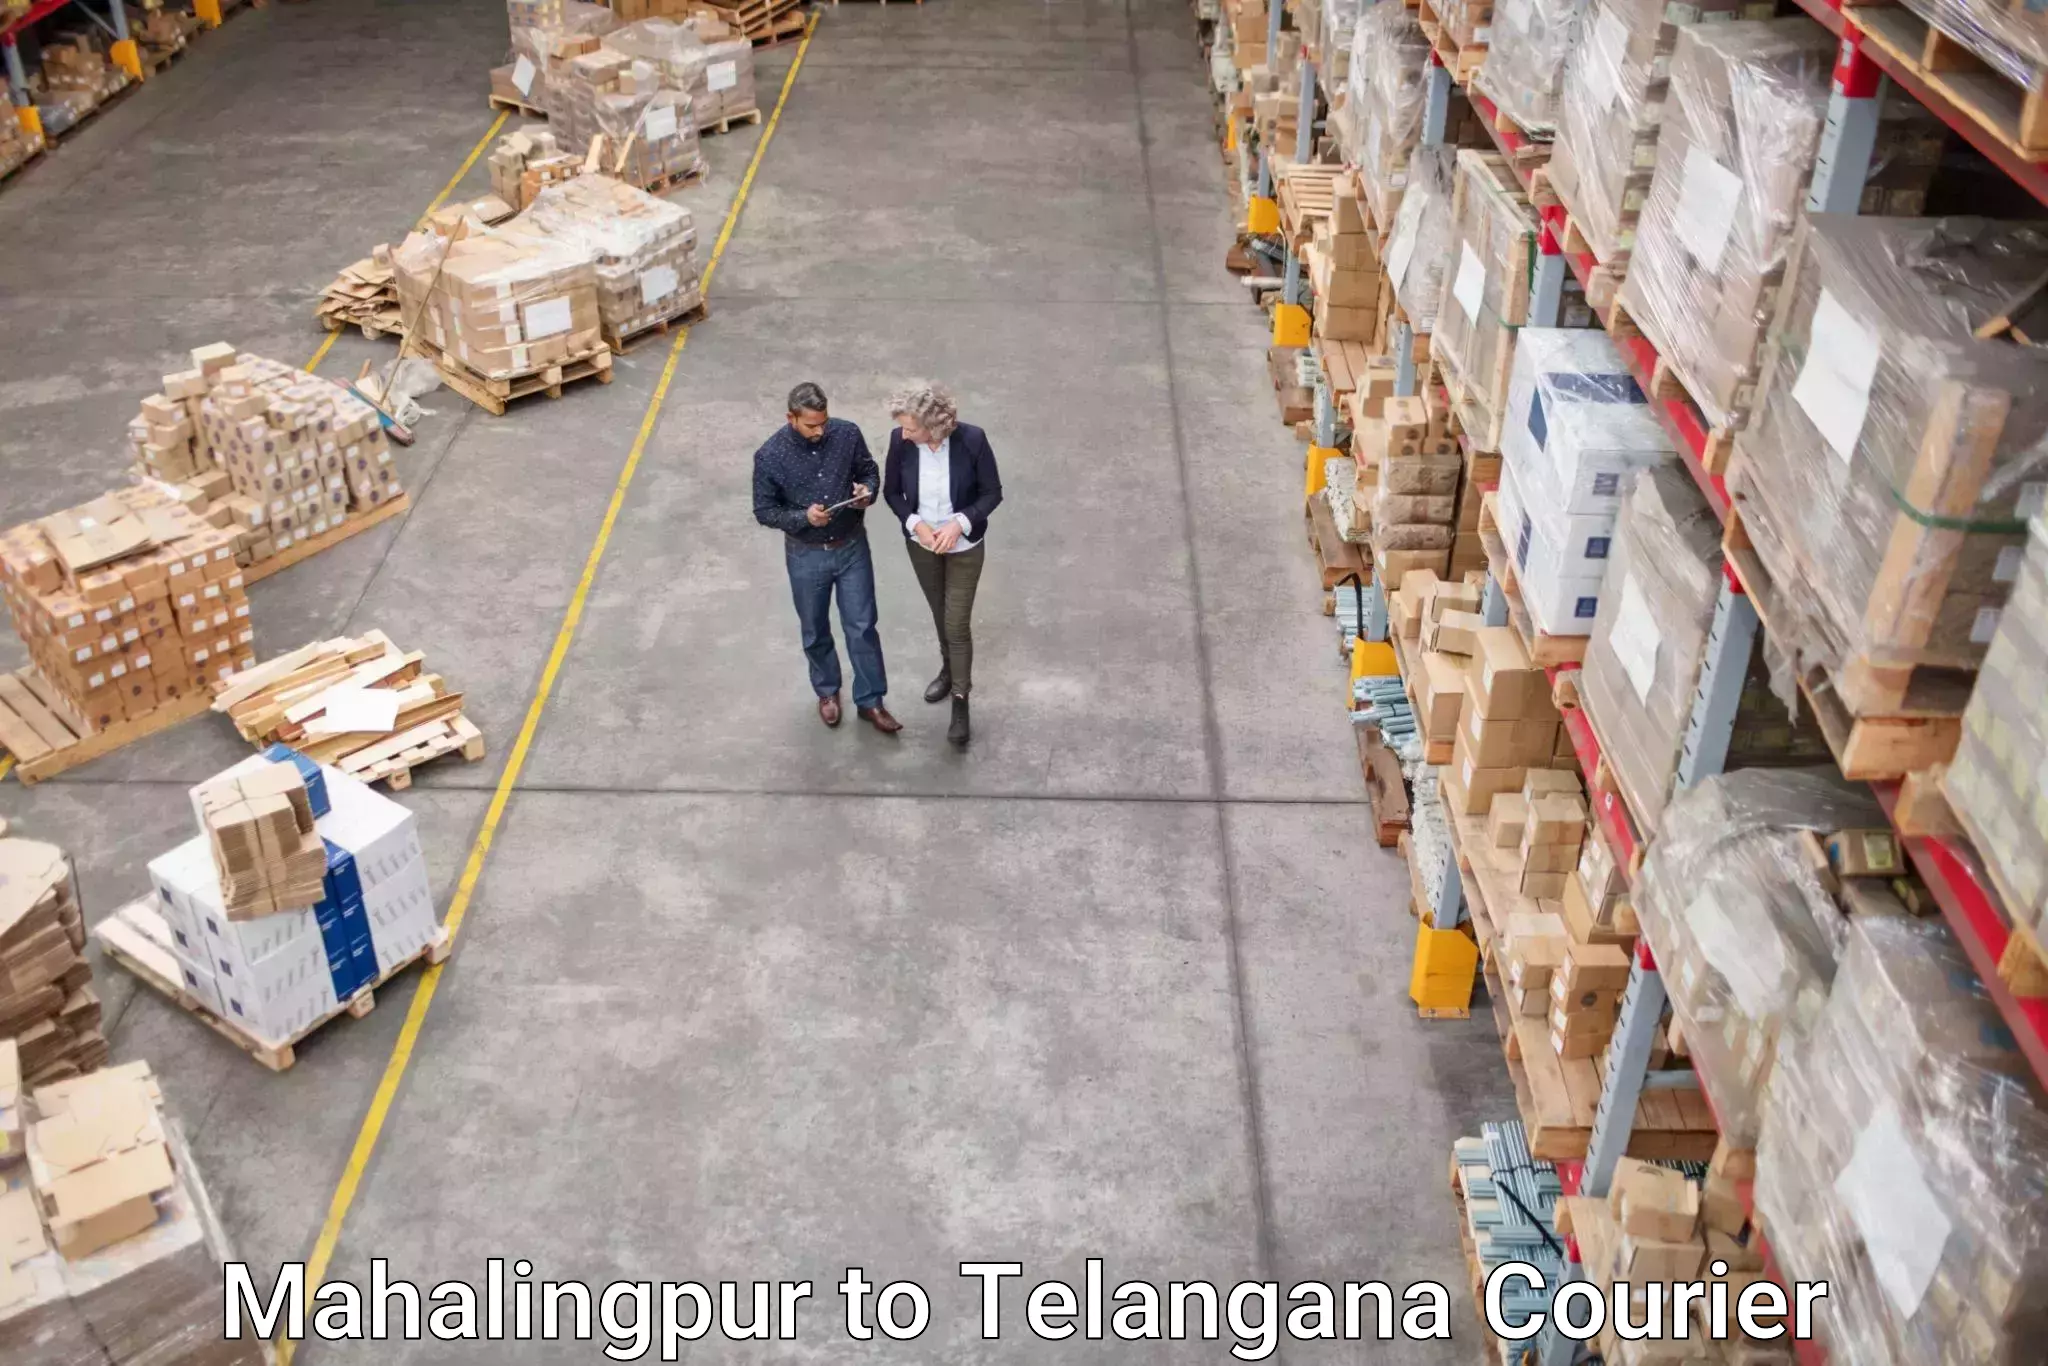 Courier service booking Mahalingpur to Amangal